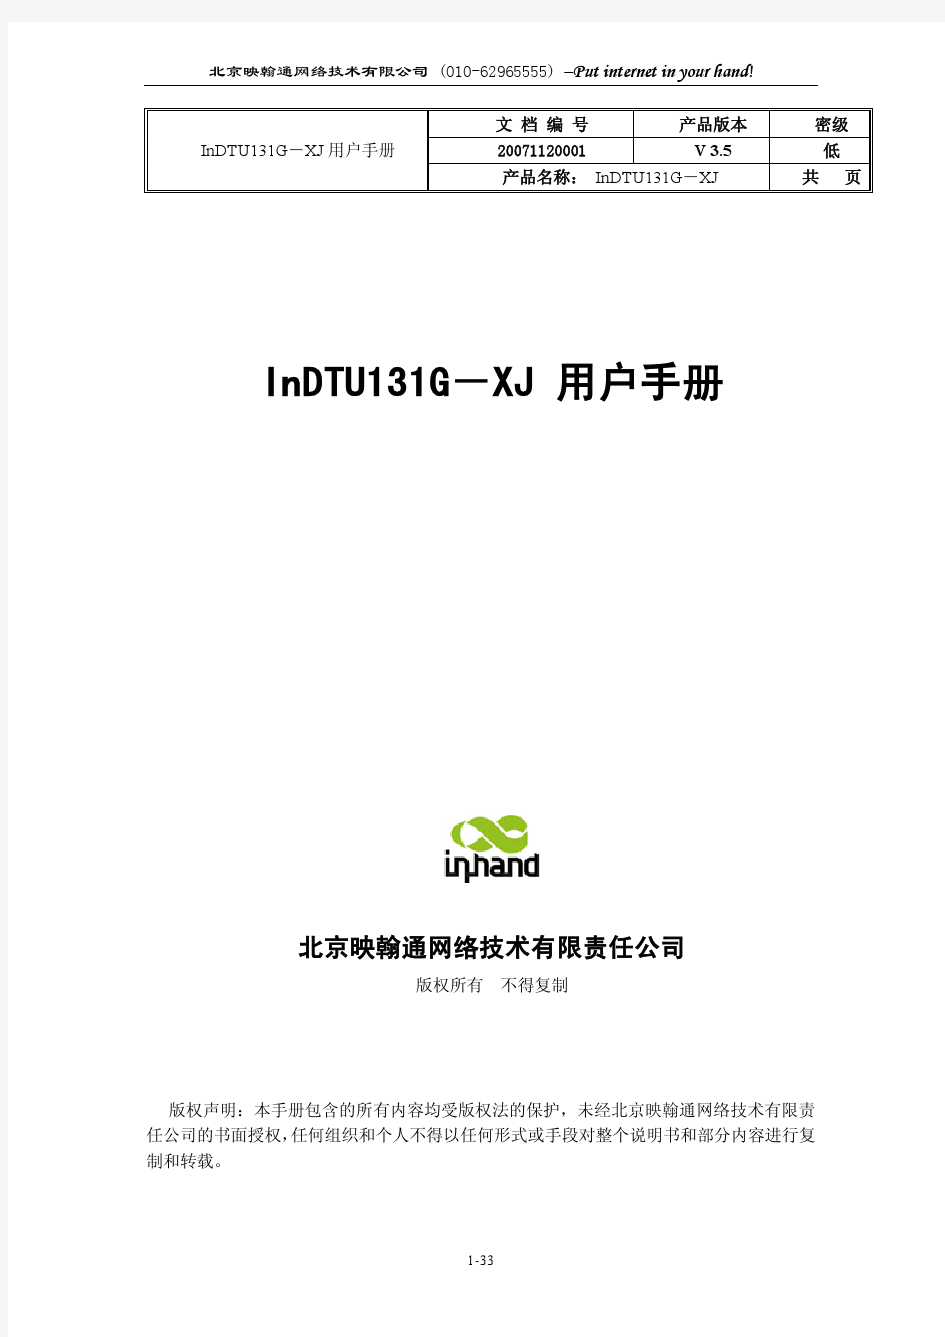 InDTU131G-XJ用户手册3.5